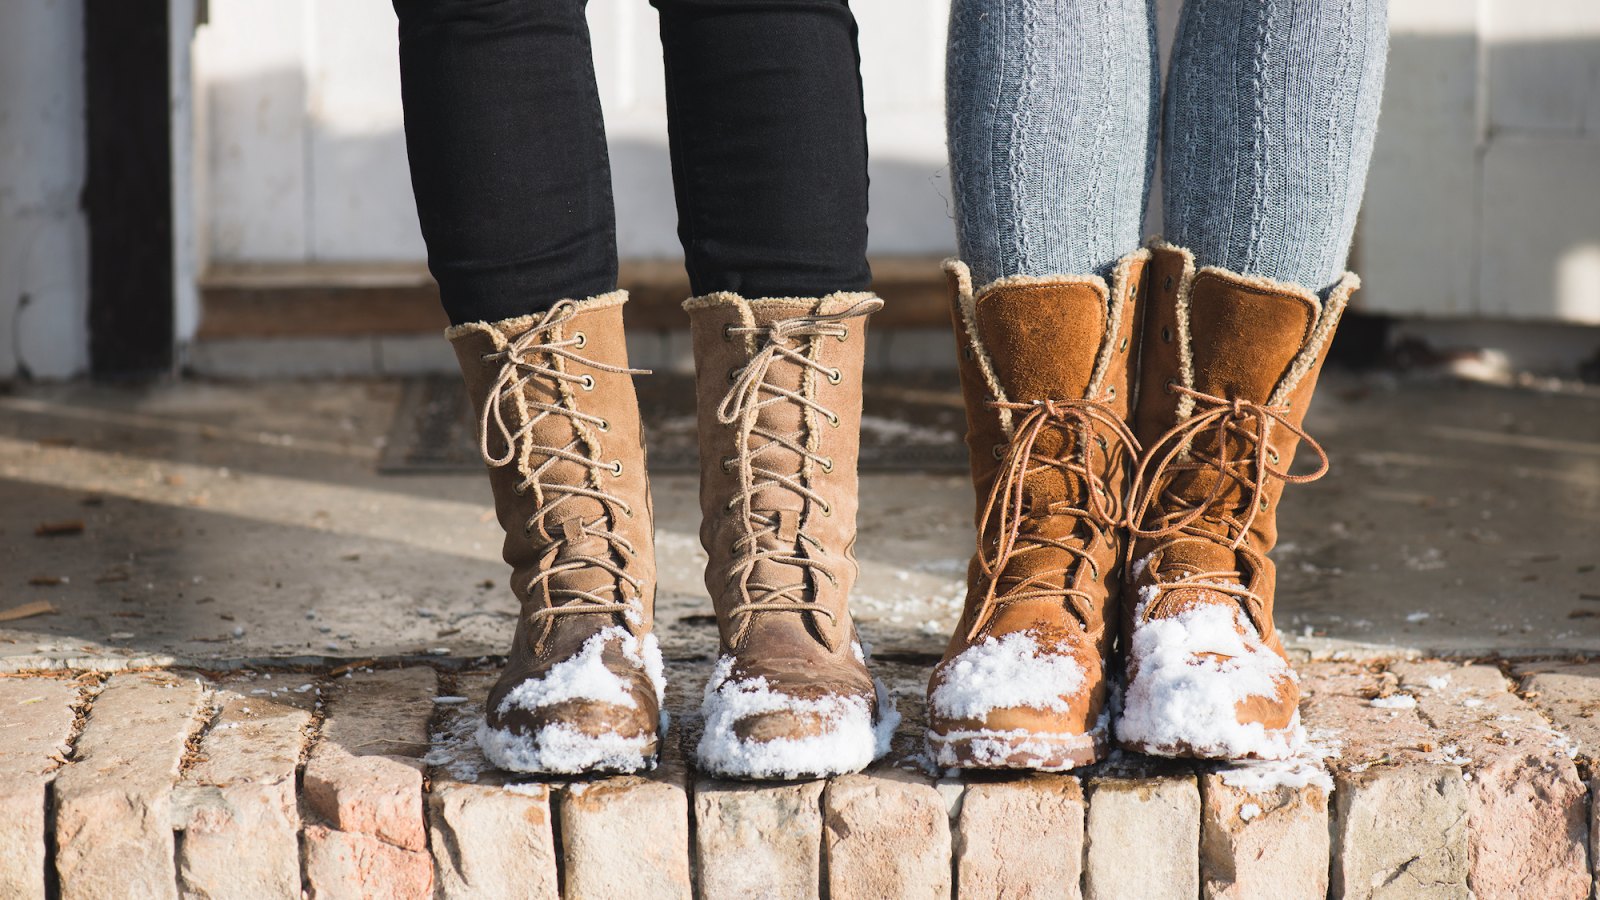 https://www.usmagazine.com/wp-content/uploads/2022/09/Women-Winter-Boots-Stock-Photo.jpg?w=1600&h=900&crop=1&quality=86&strip=all